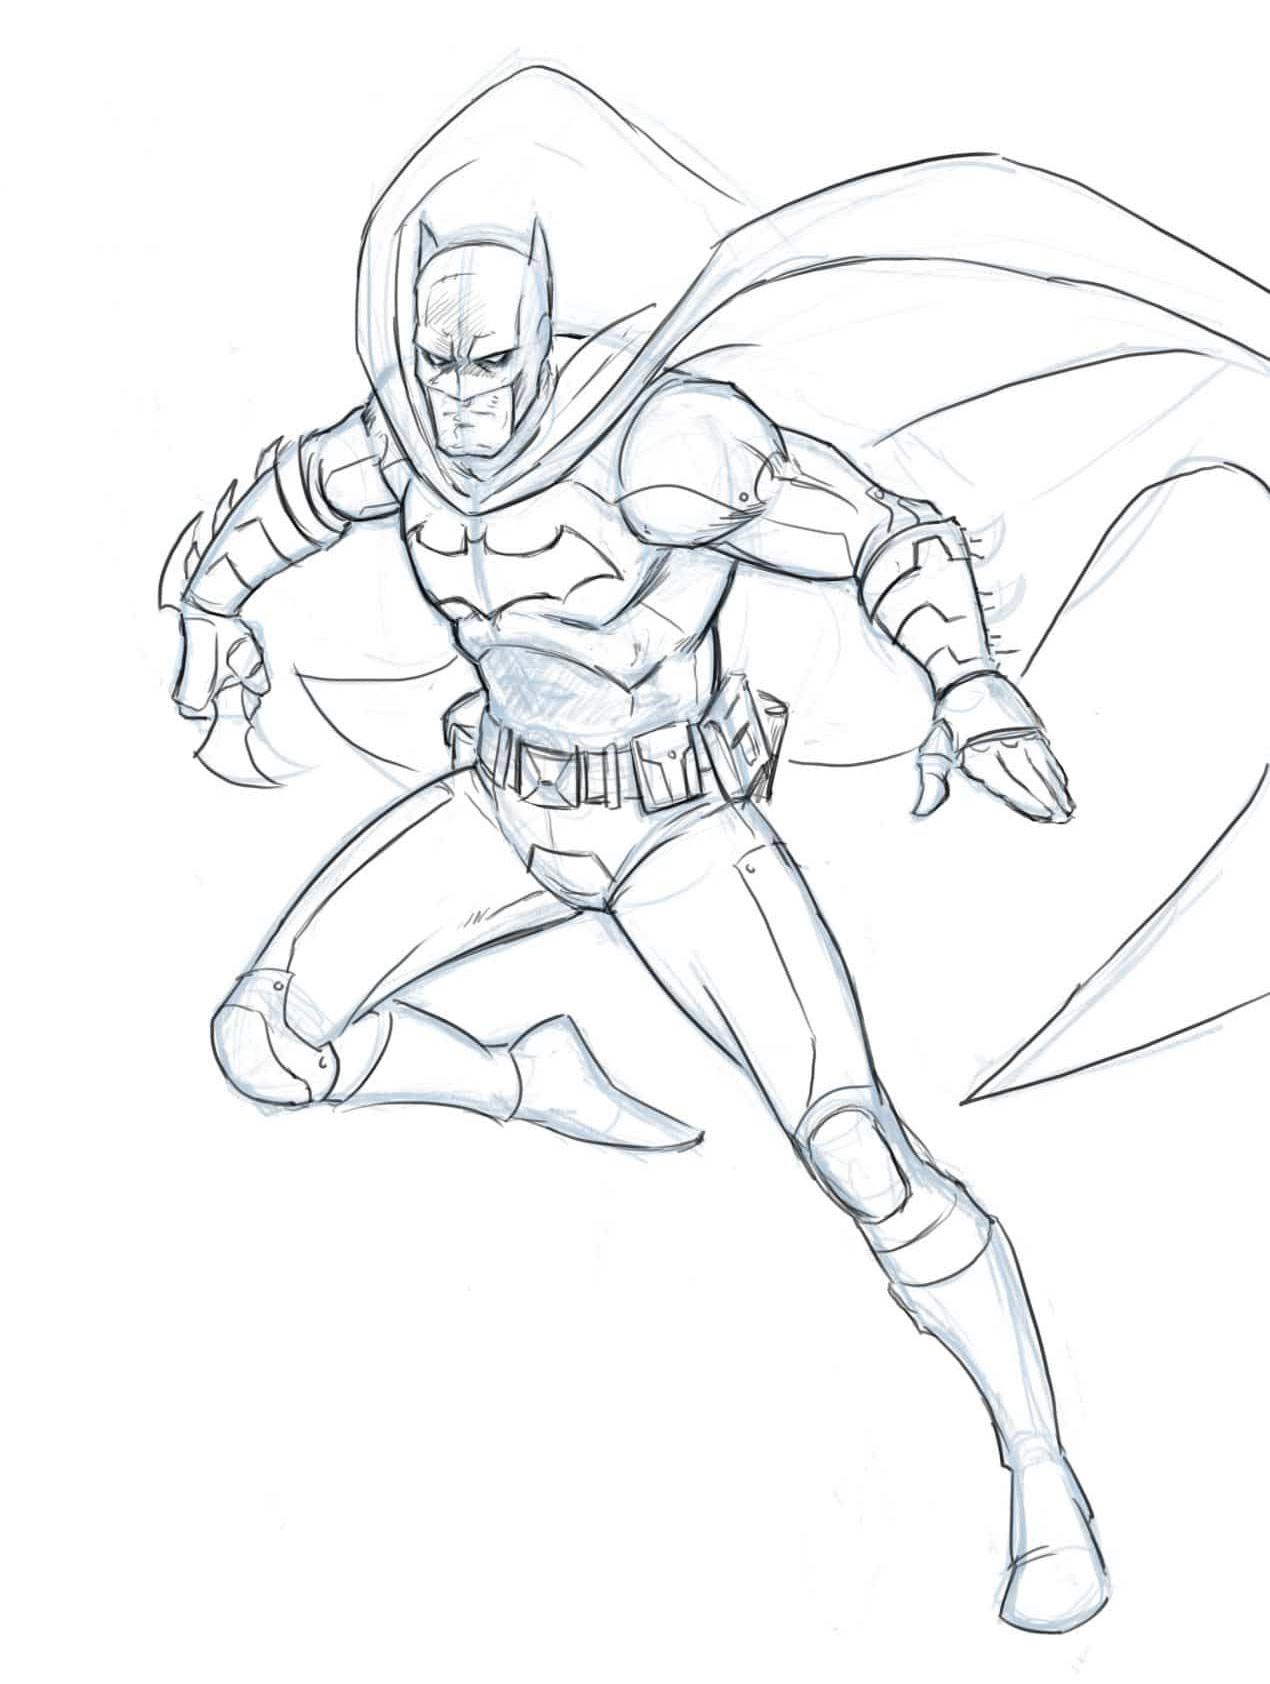 Batman drawing reference